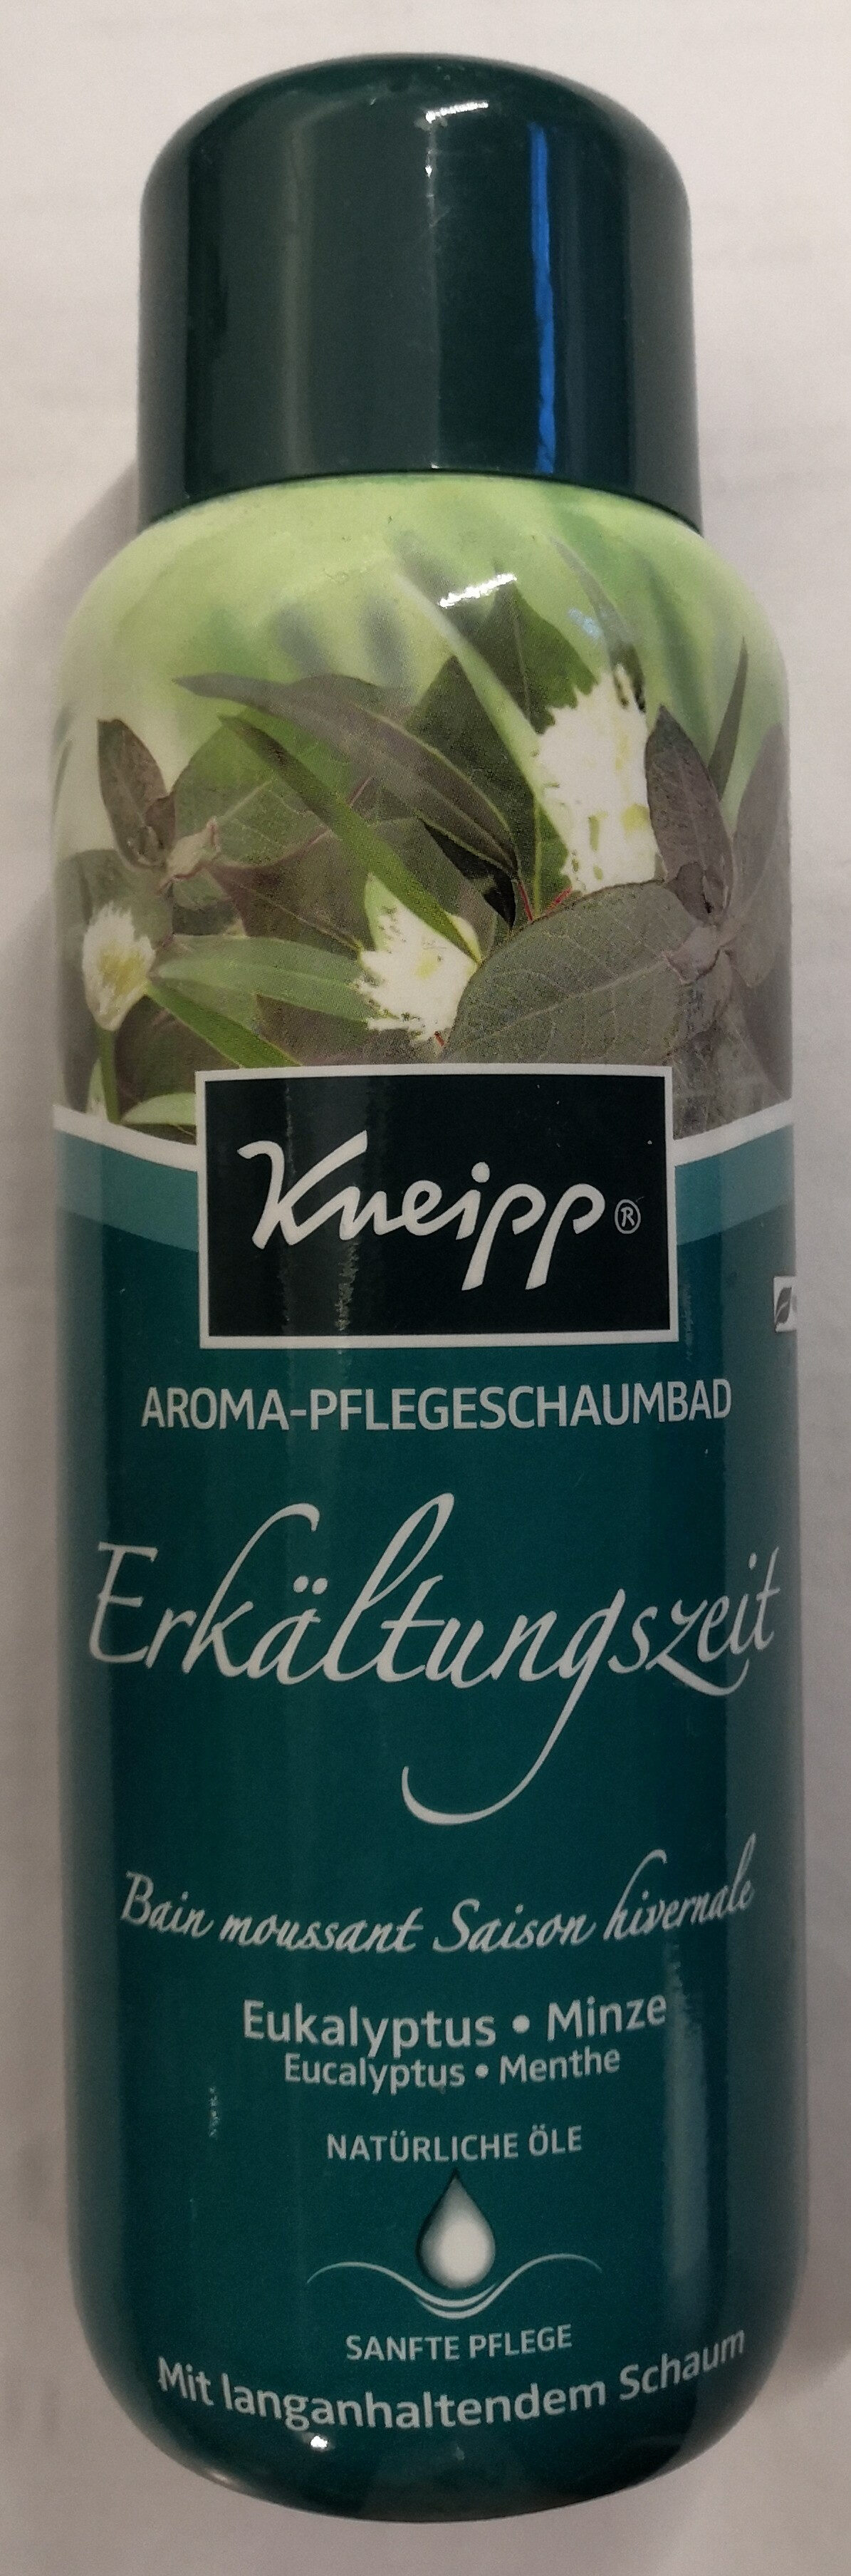 Aroma-Pflegeschaumbad Erkältungszeit Eukalyptus-Minze - Product - de